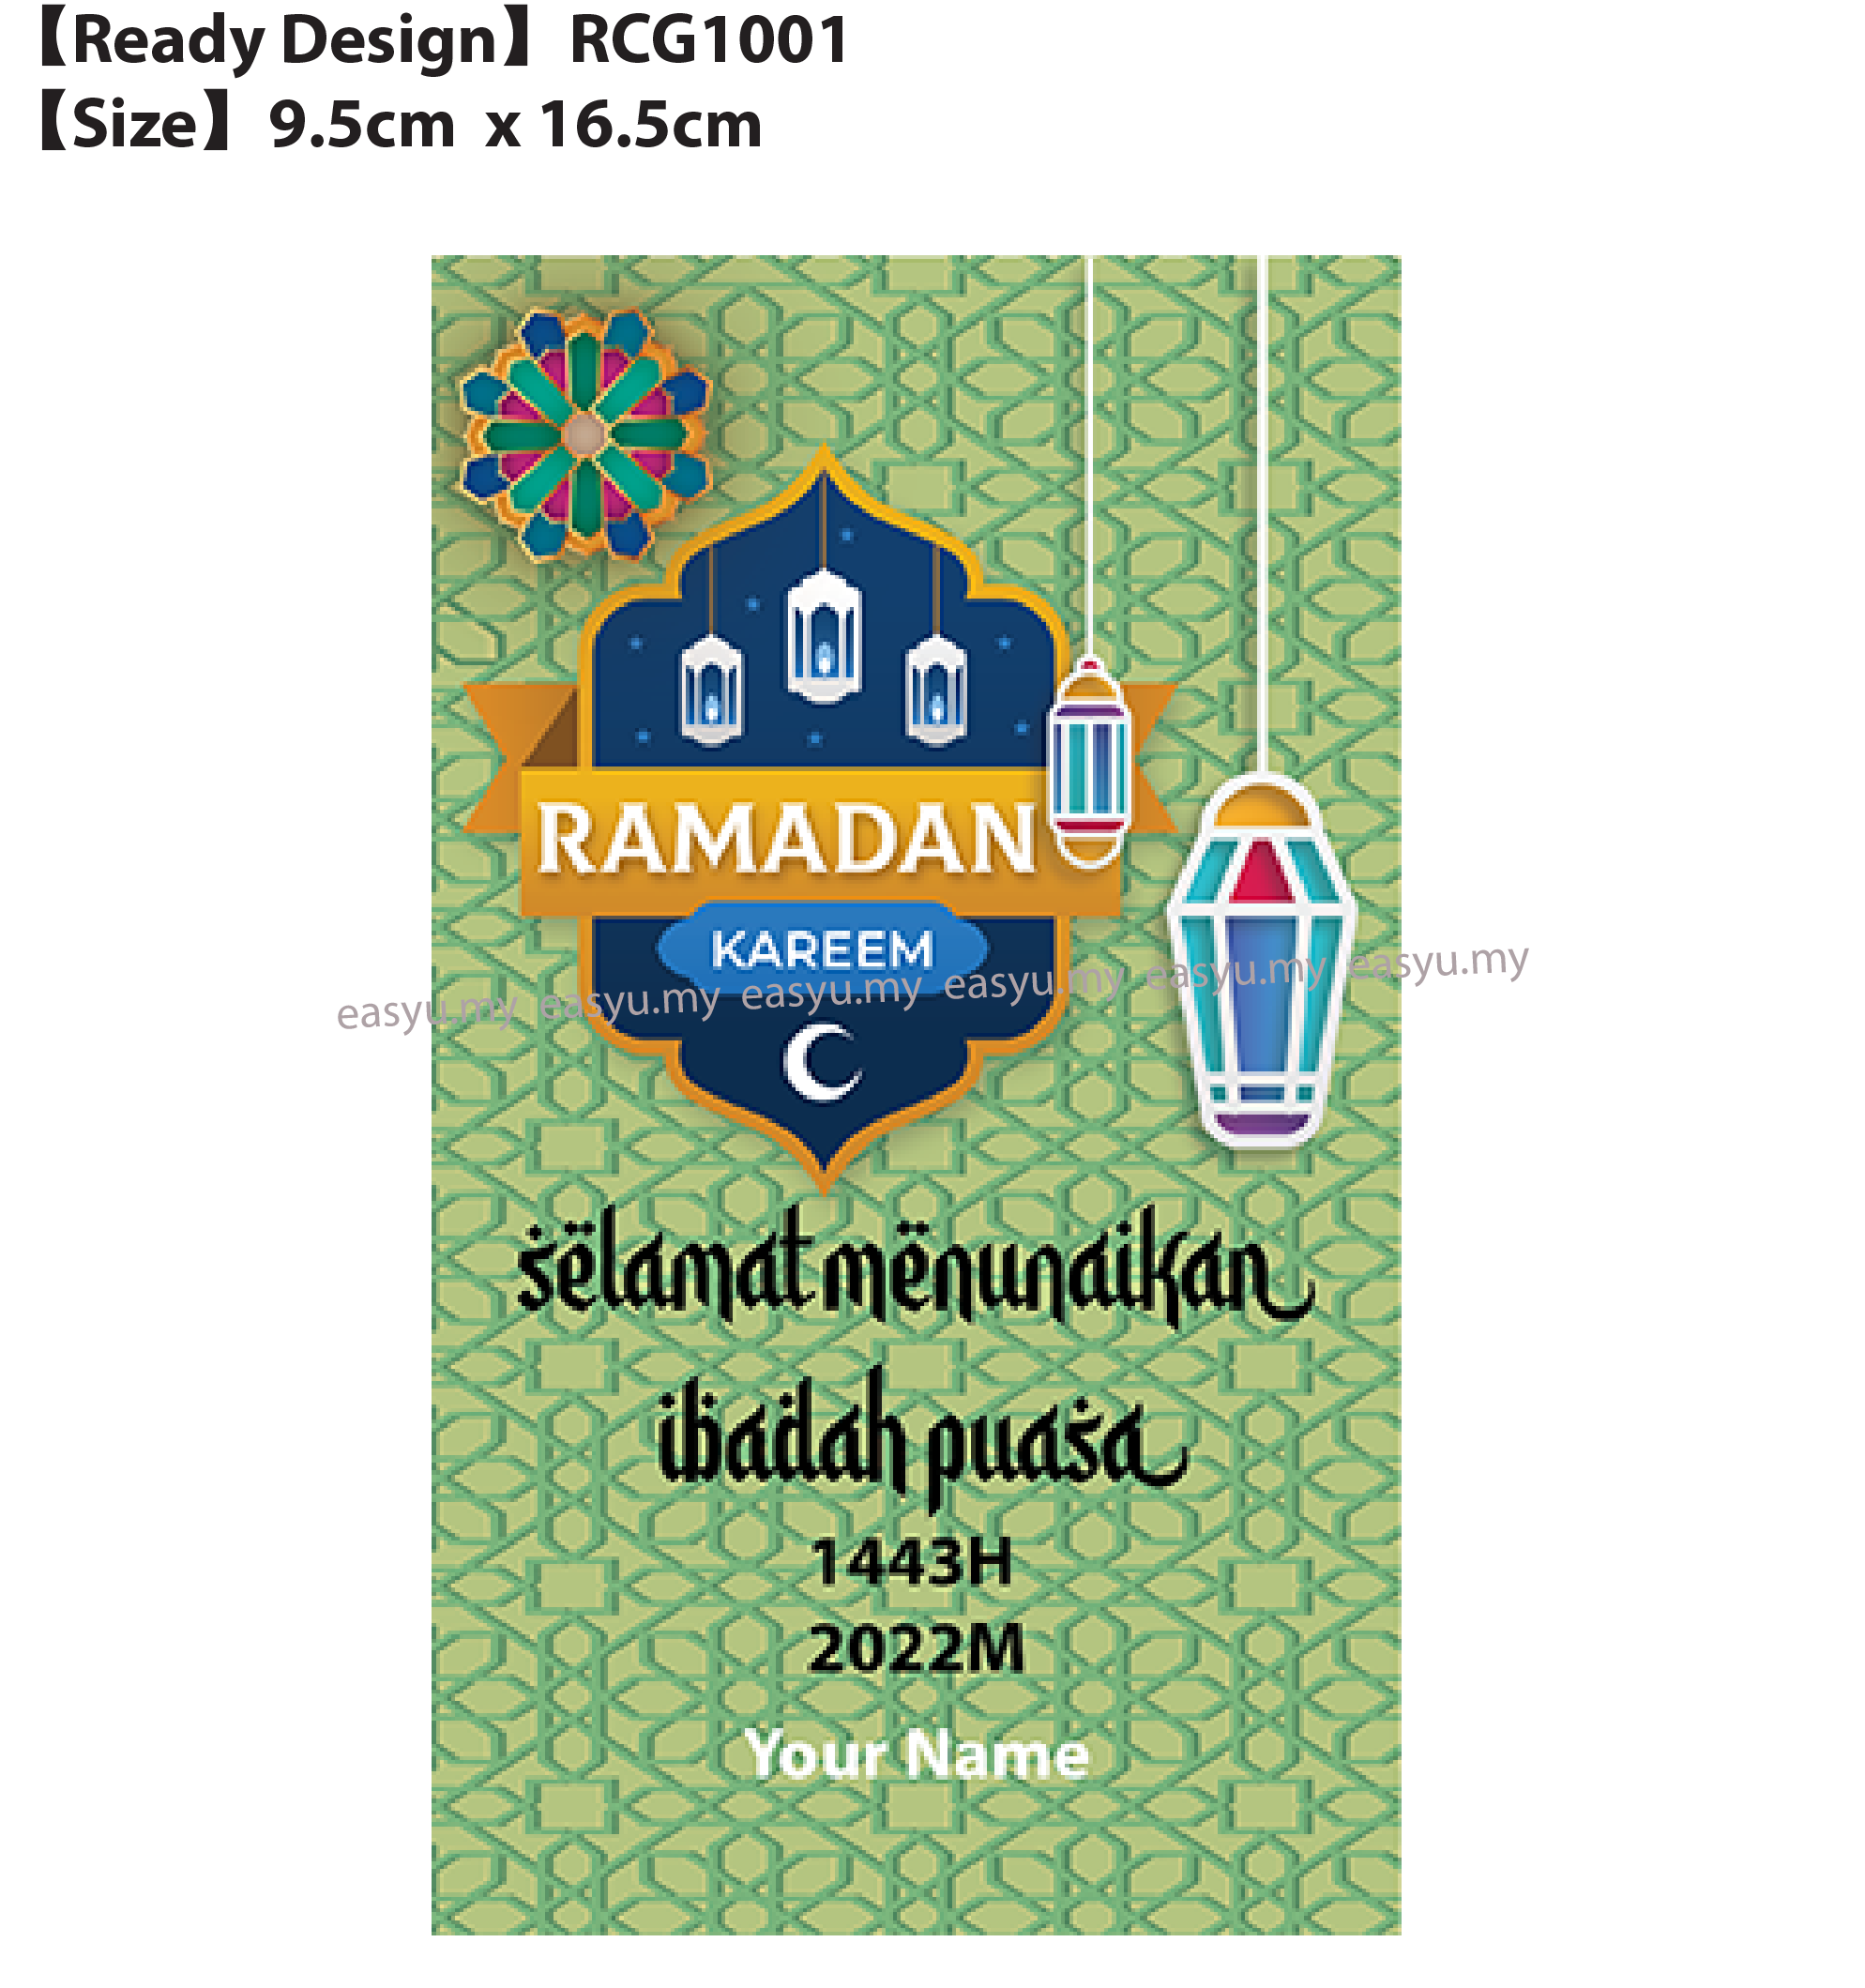 kad ramadan greeting gift card printing online